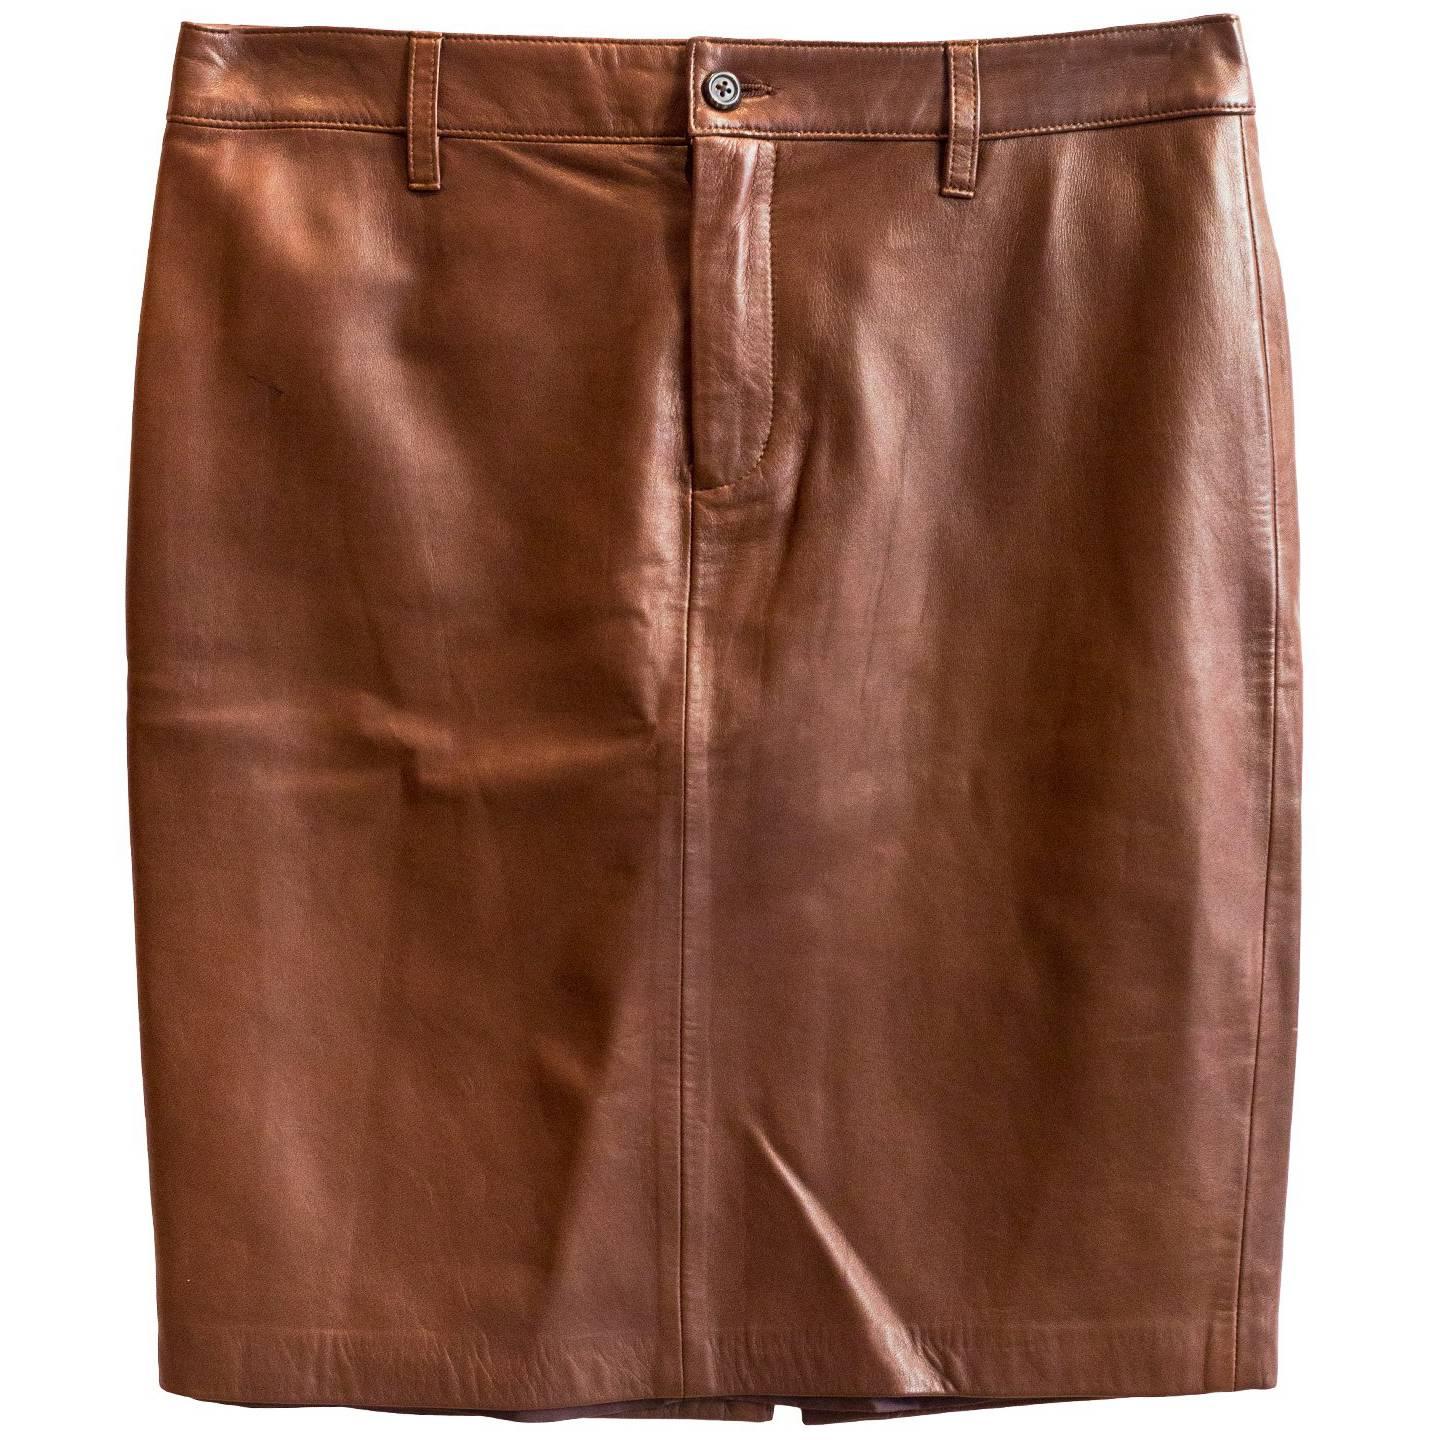 Ralph Lauren Brown Leather Skirt Sz 6 NWT